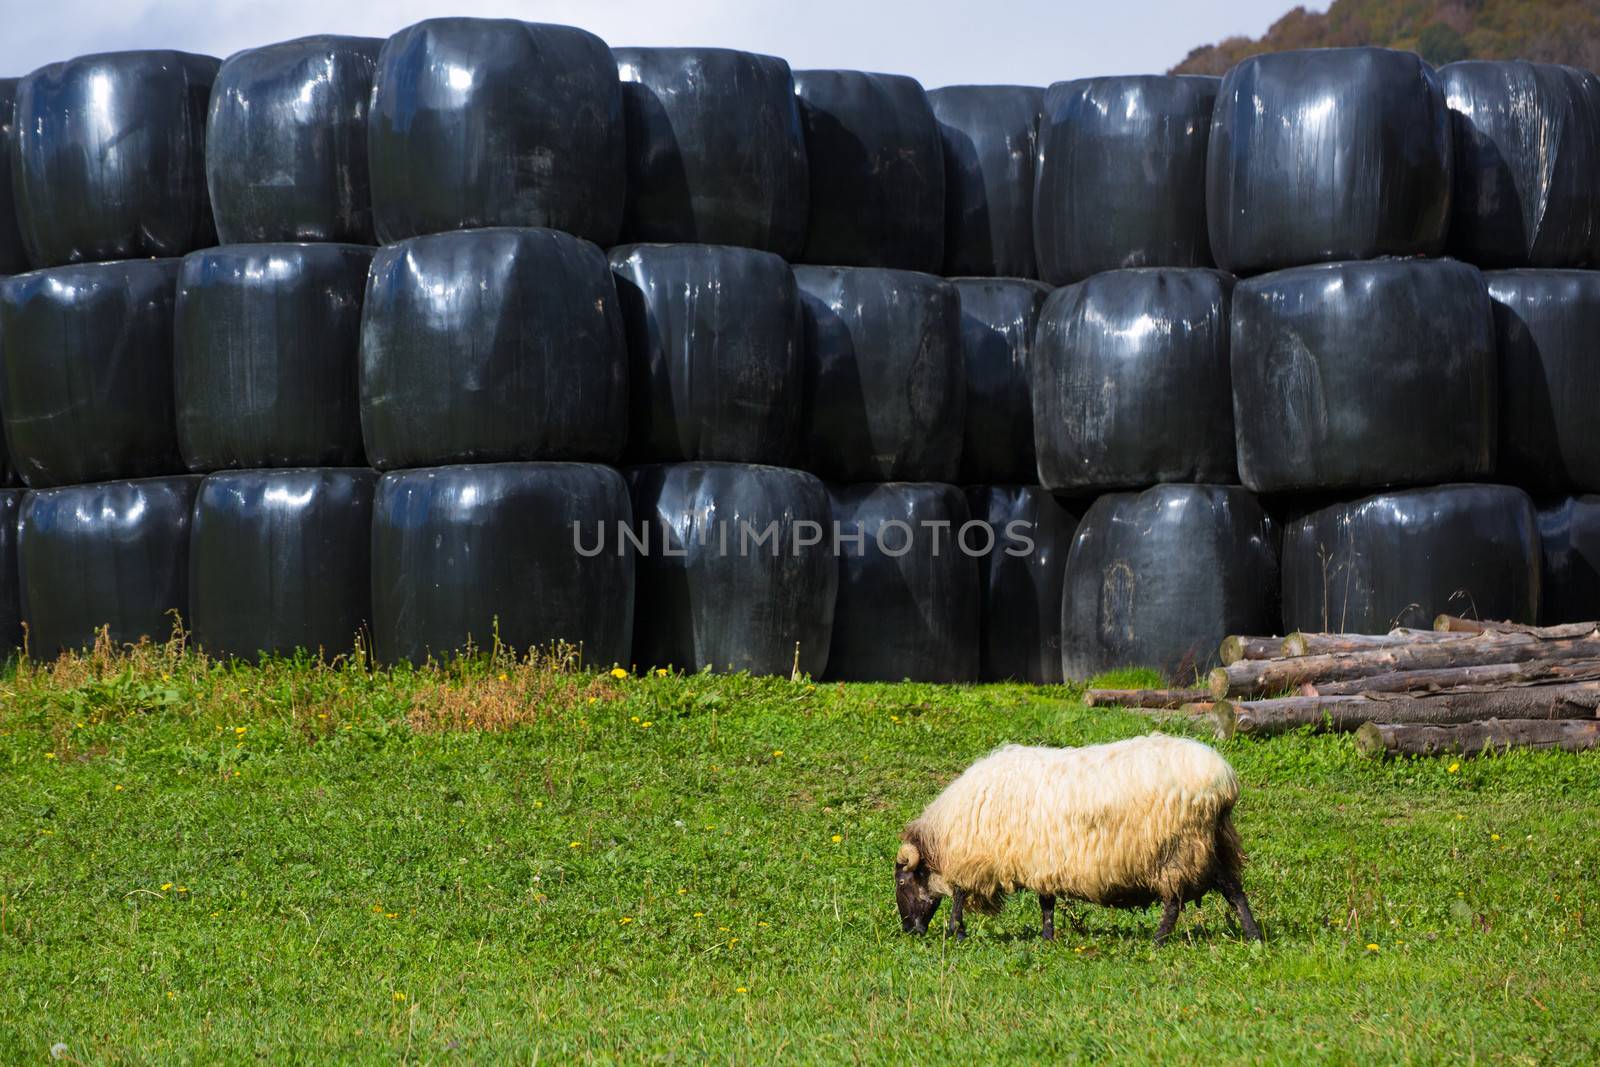 Latxa sheep in Pyrenees of Navarra grazing in meadow at Spain